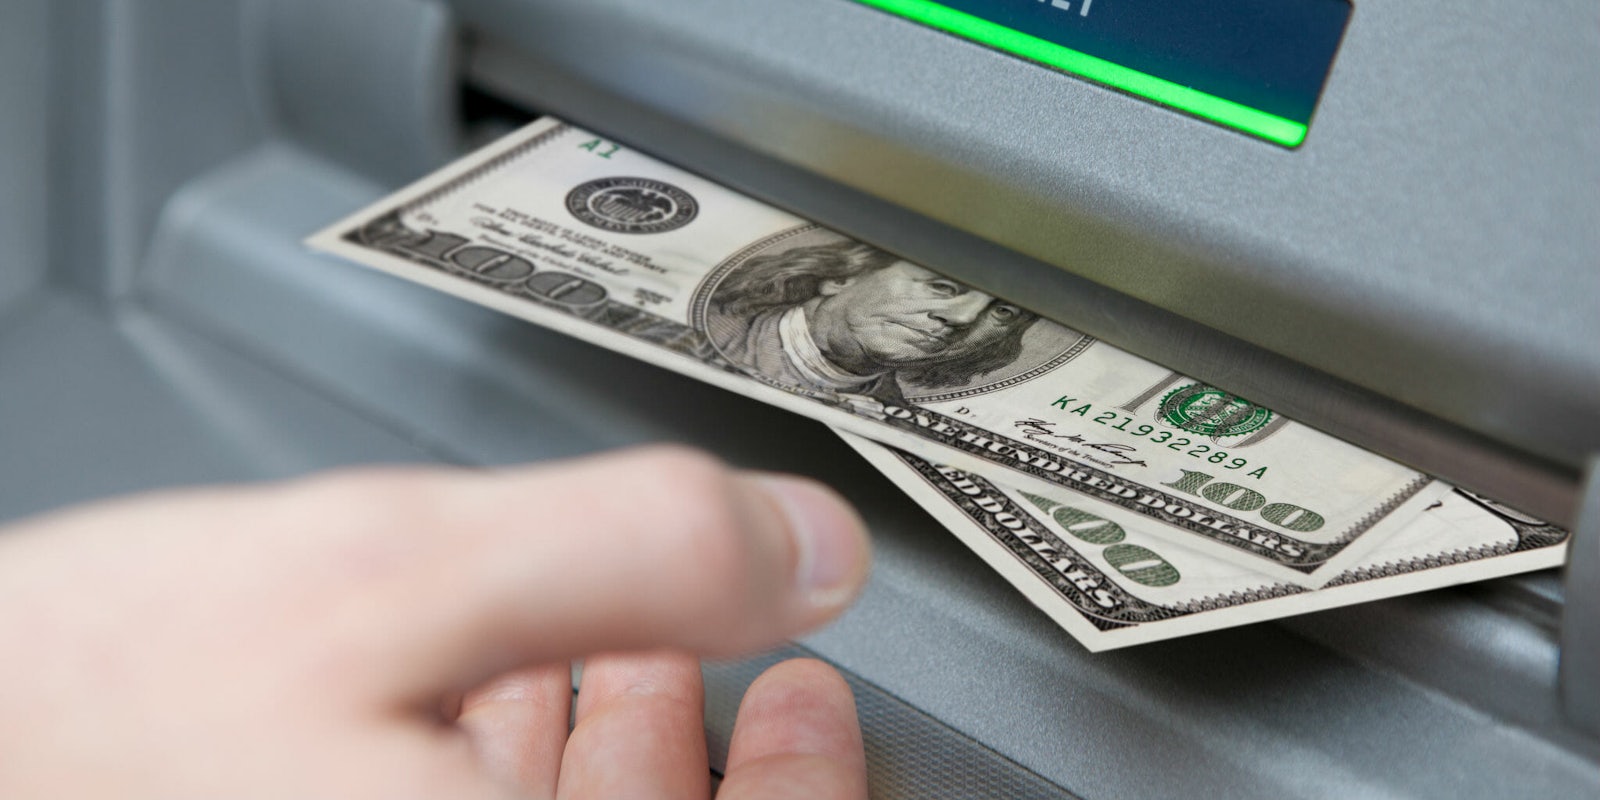 ATM money transfer